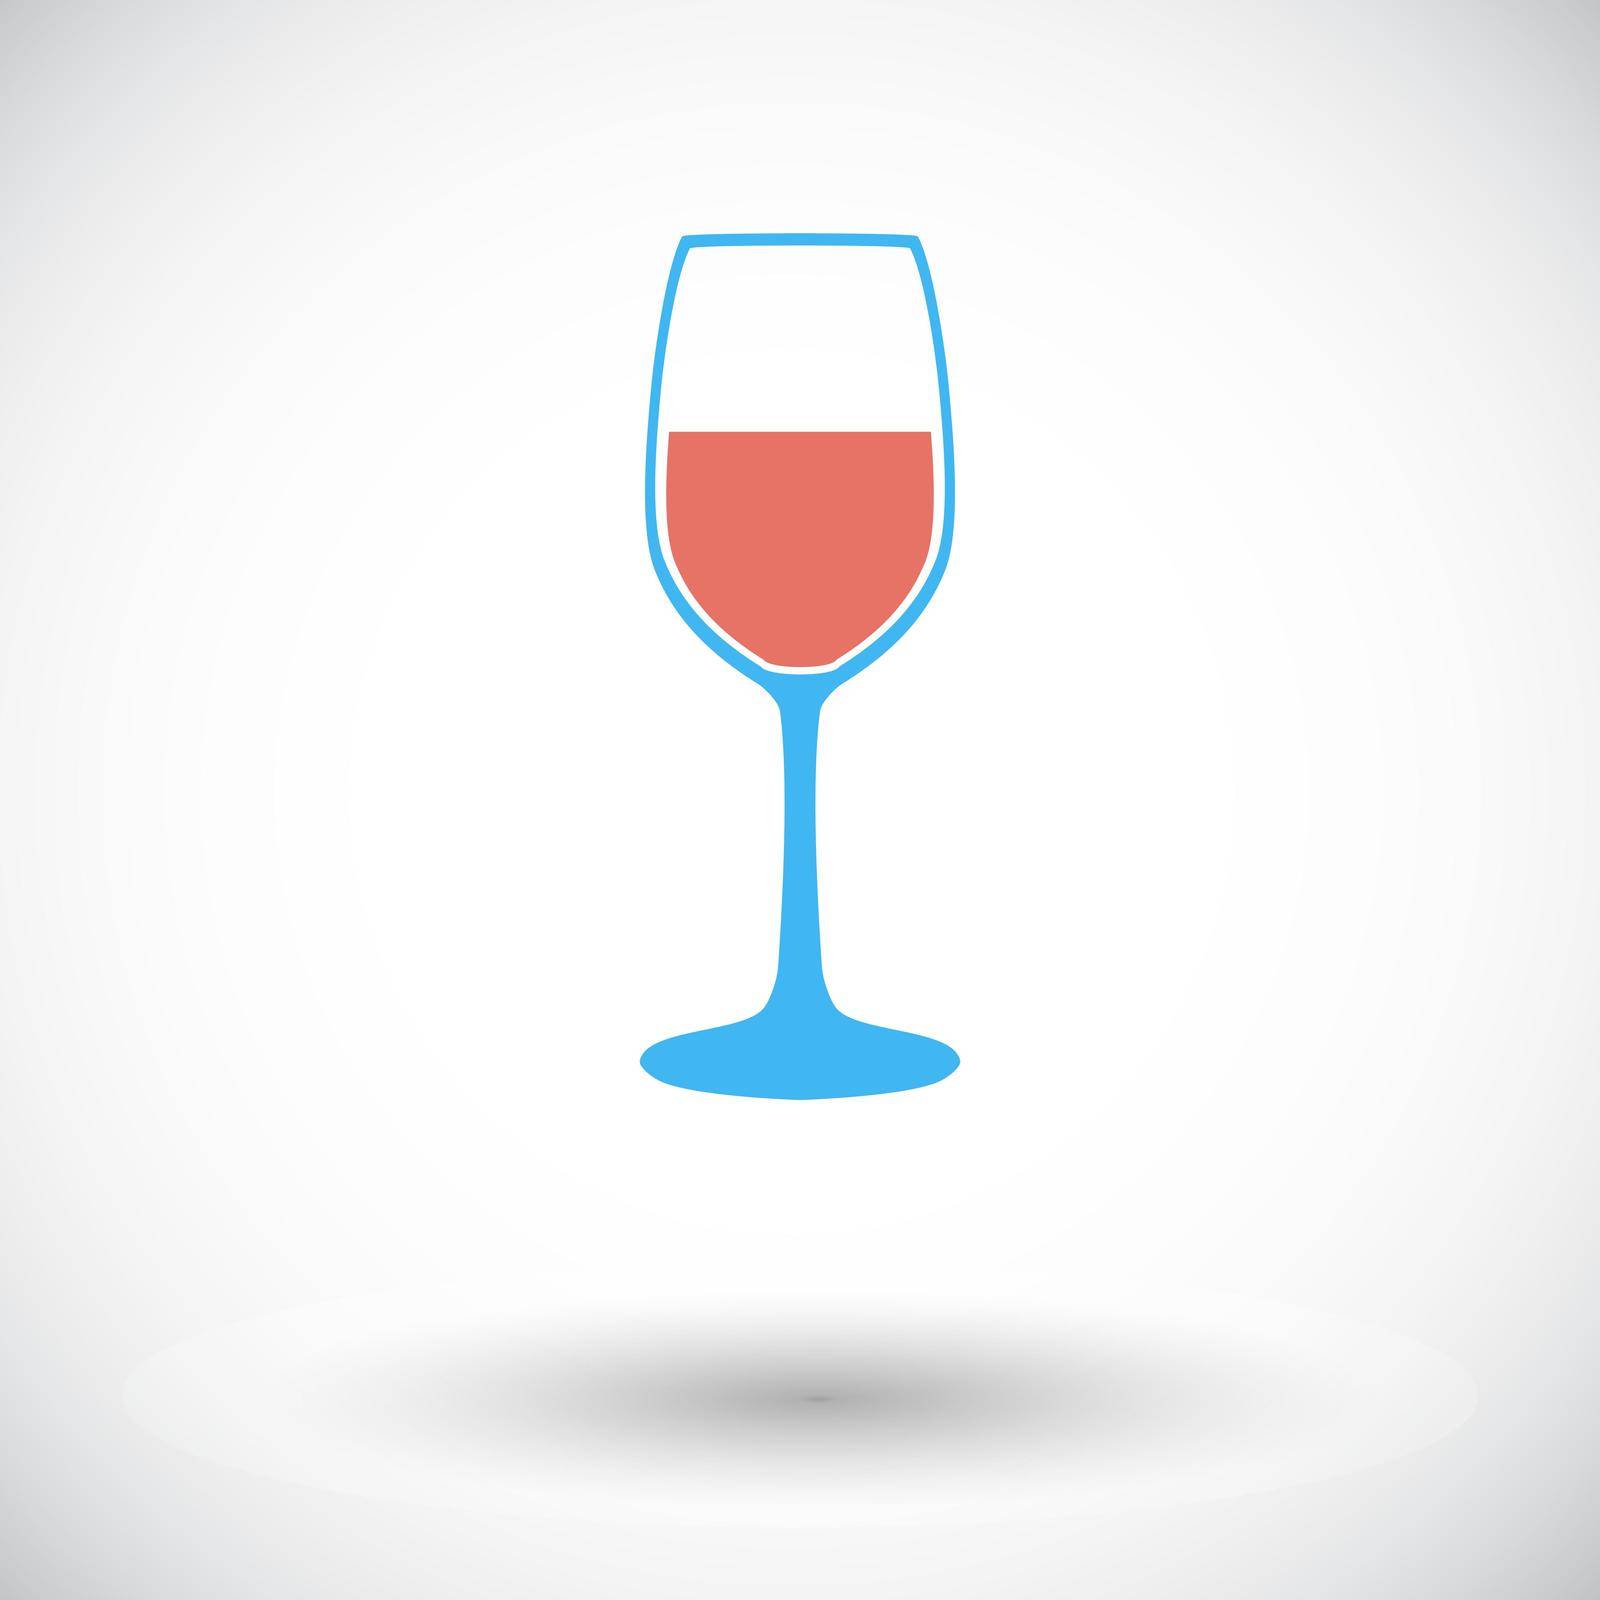 Wine glass. Single flat icon on white background. Vector illustration.